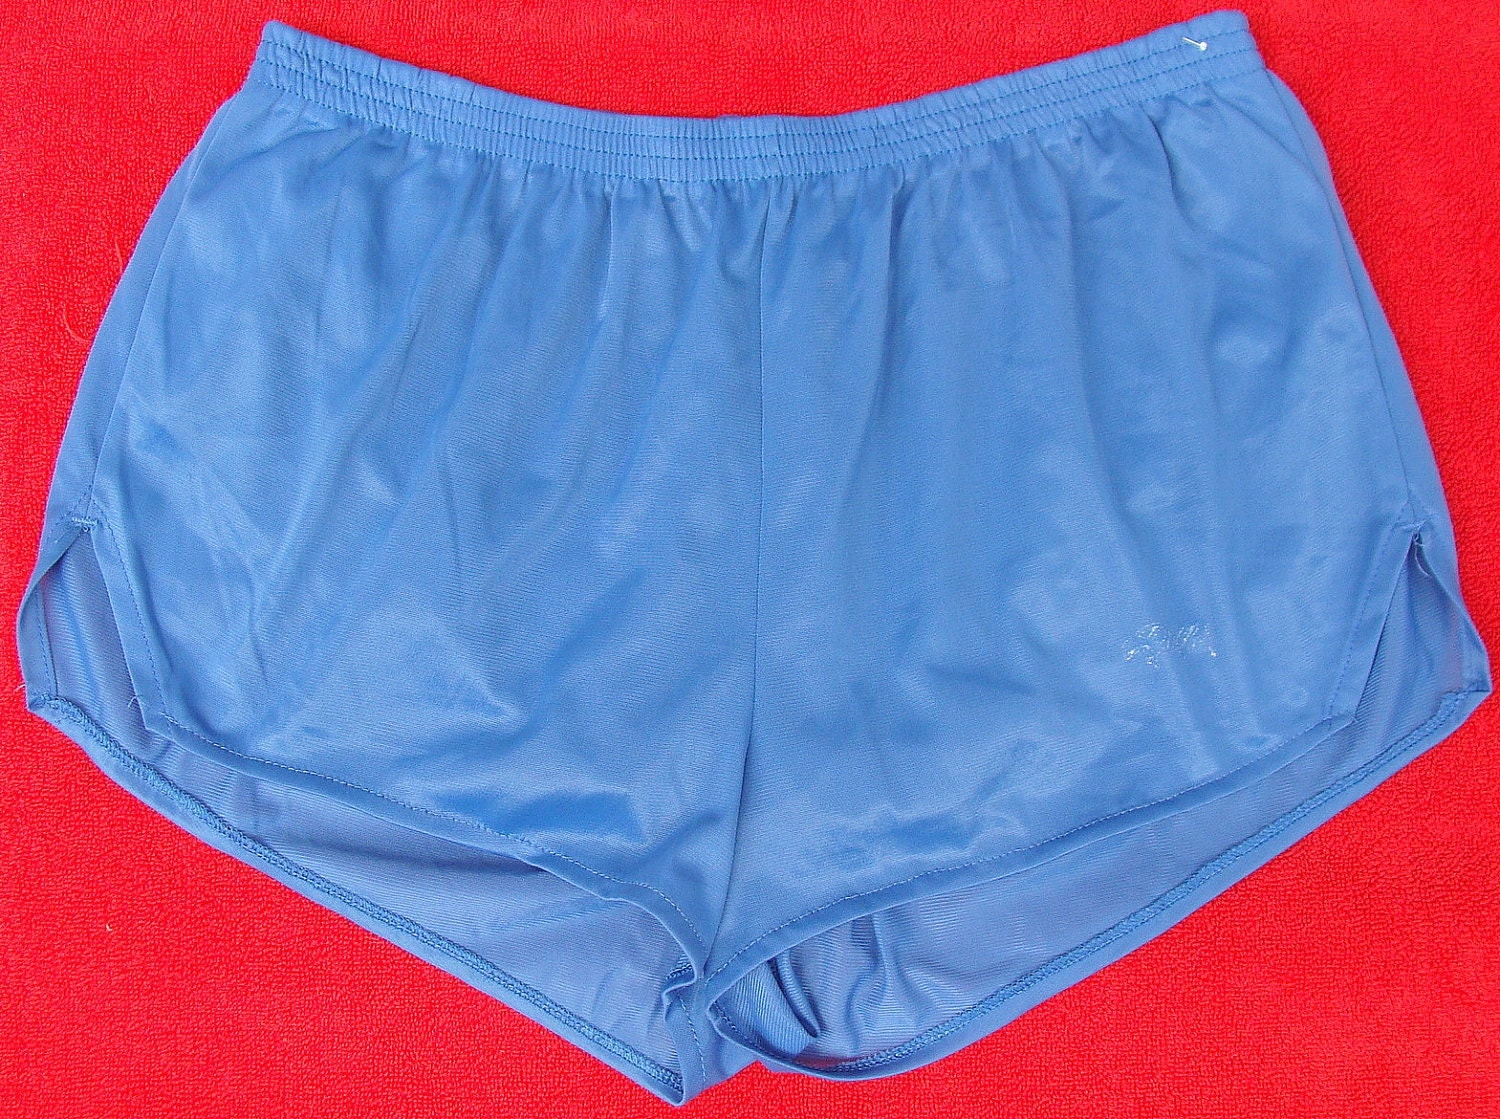 Vintage 80's Dolfin nylon running shorts M by julianasvintage